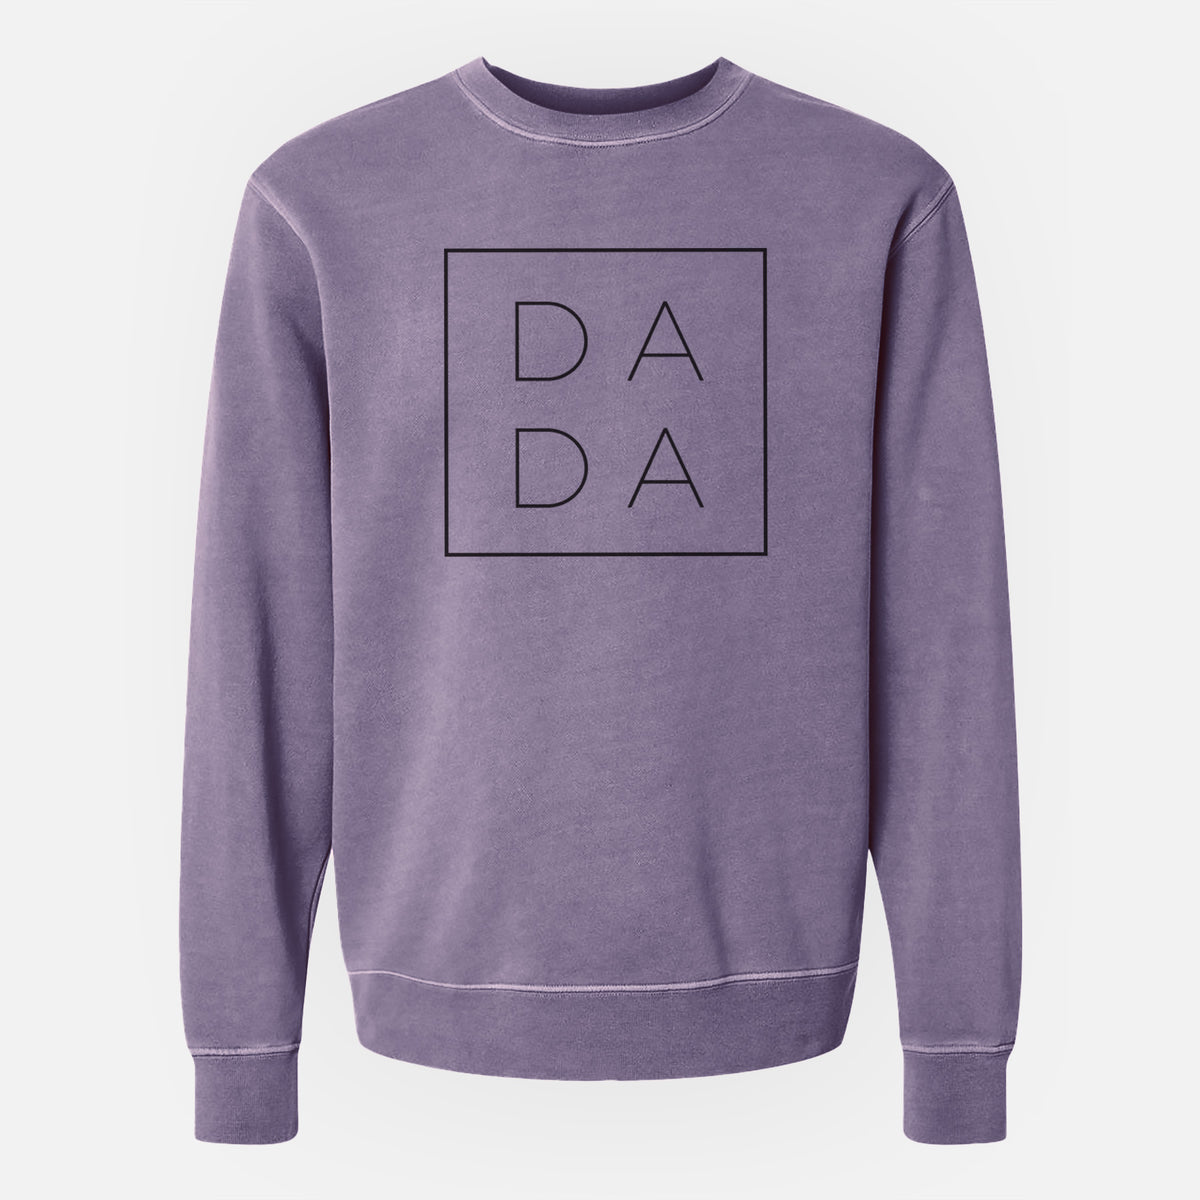 Dada Boxed - Unisex Pigment Dyed Crew Sweatshirt